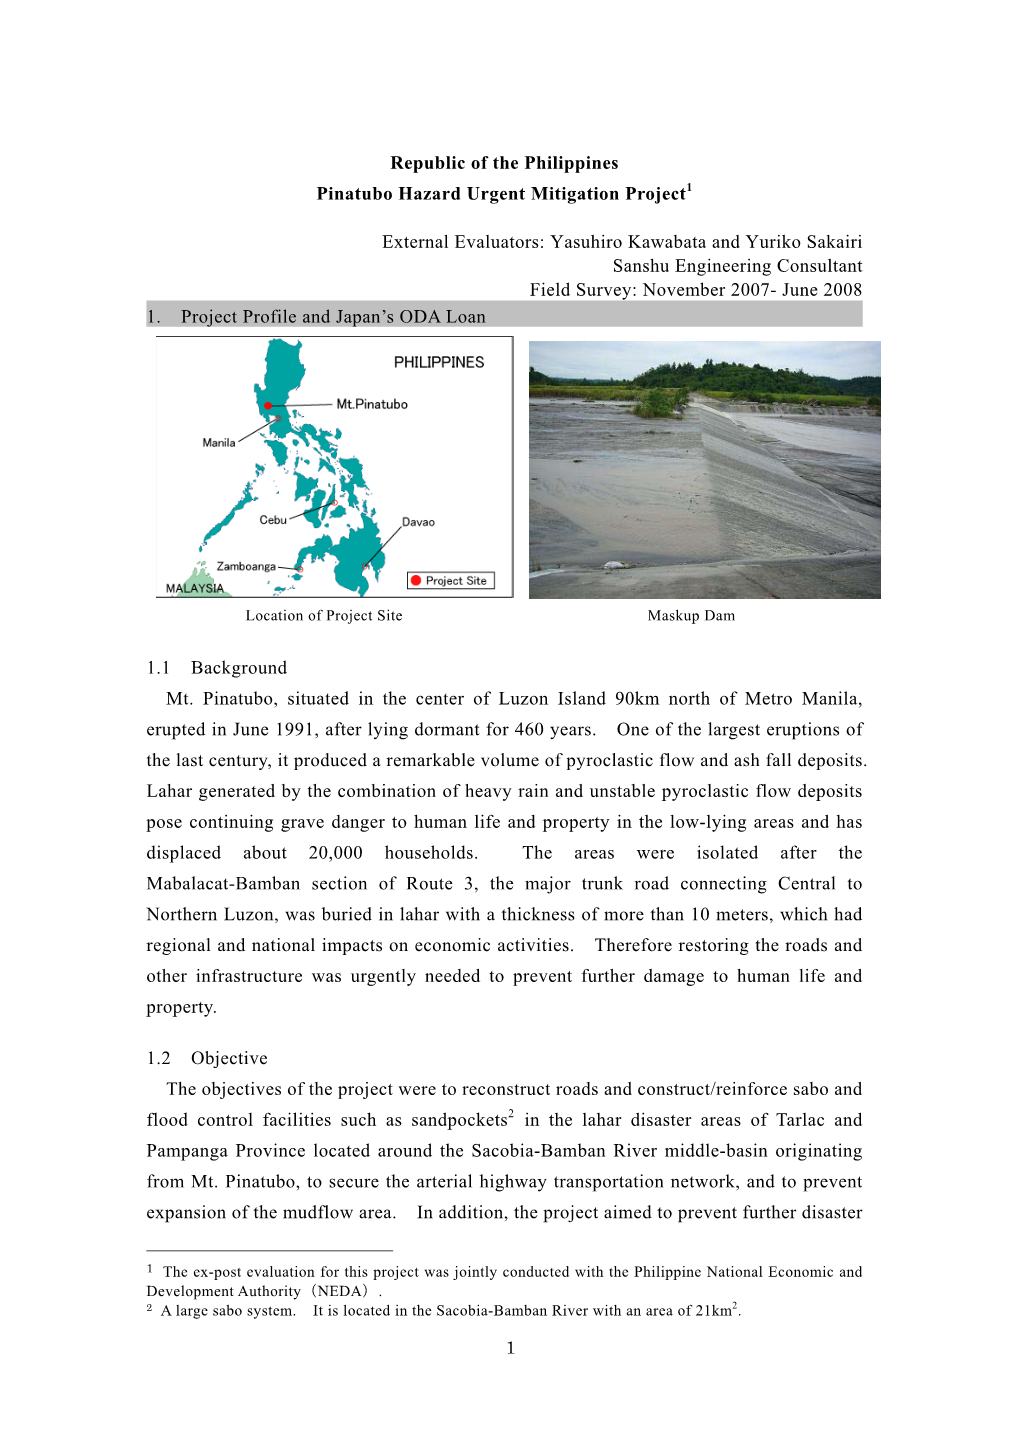 Republic of the Philippines Pinatubo Hazard Urgent Mitigation Project1